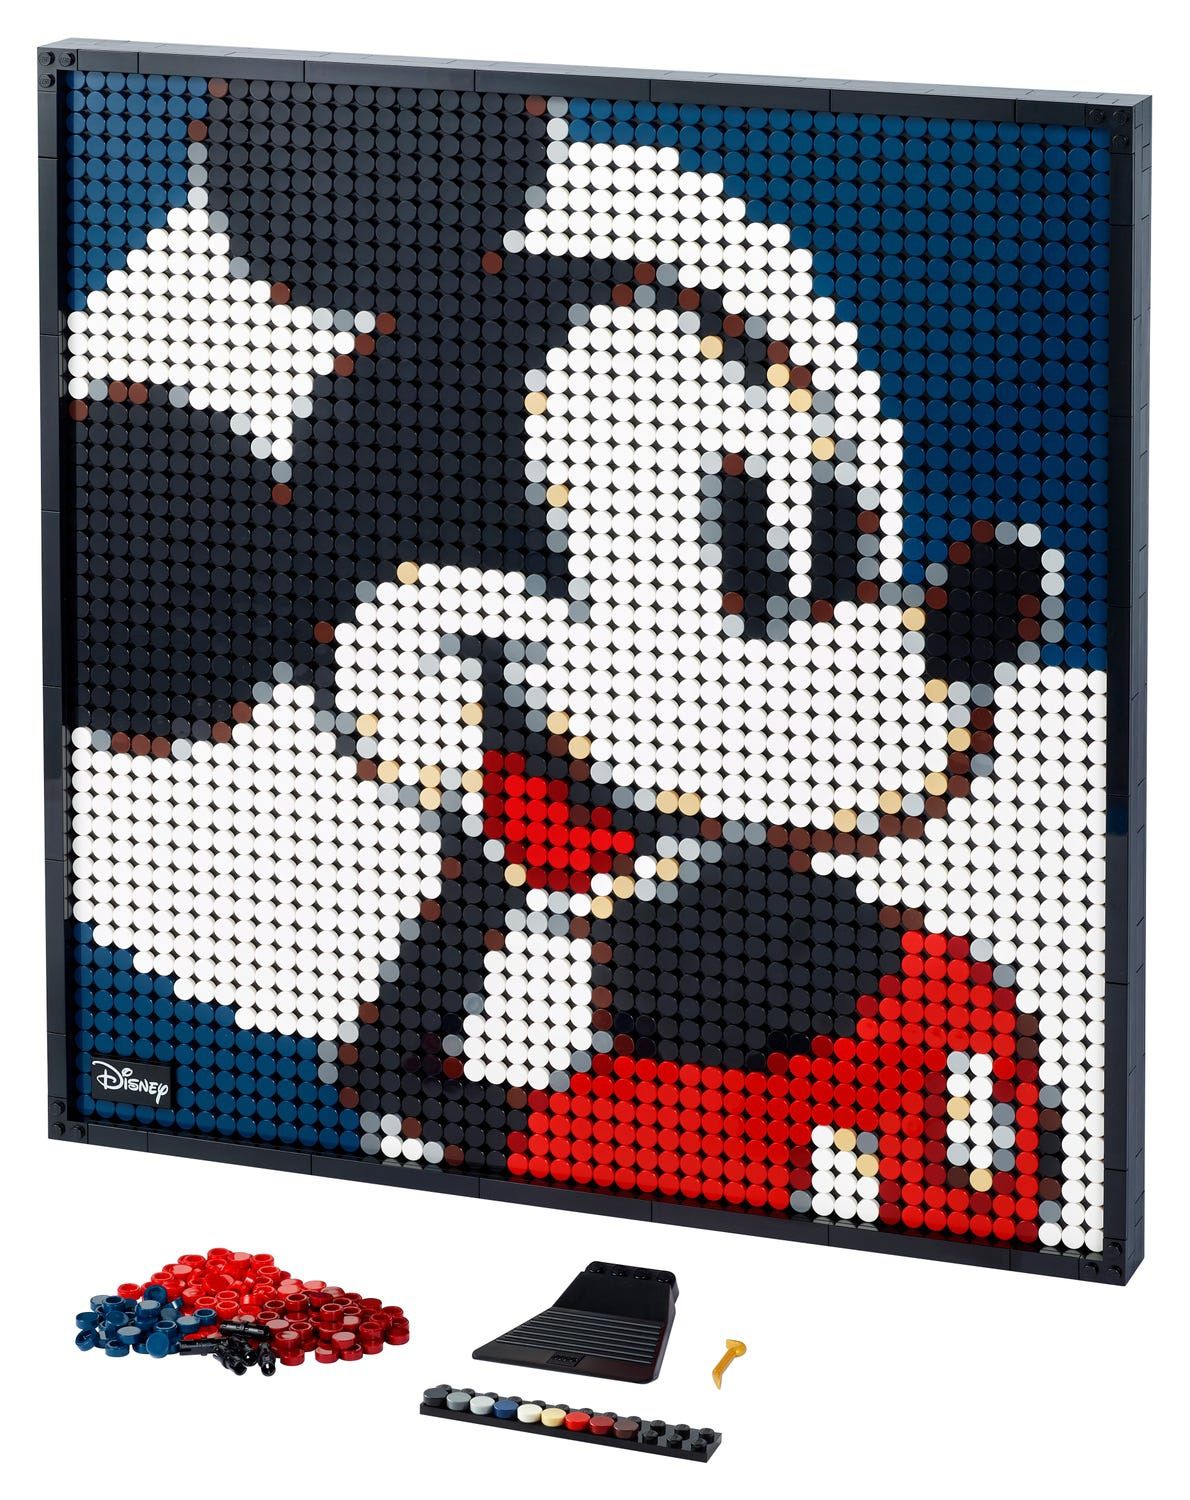 LEGO Art - Disney's Mickey Mouse 31202, 2658 piese, nou/sigilat